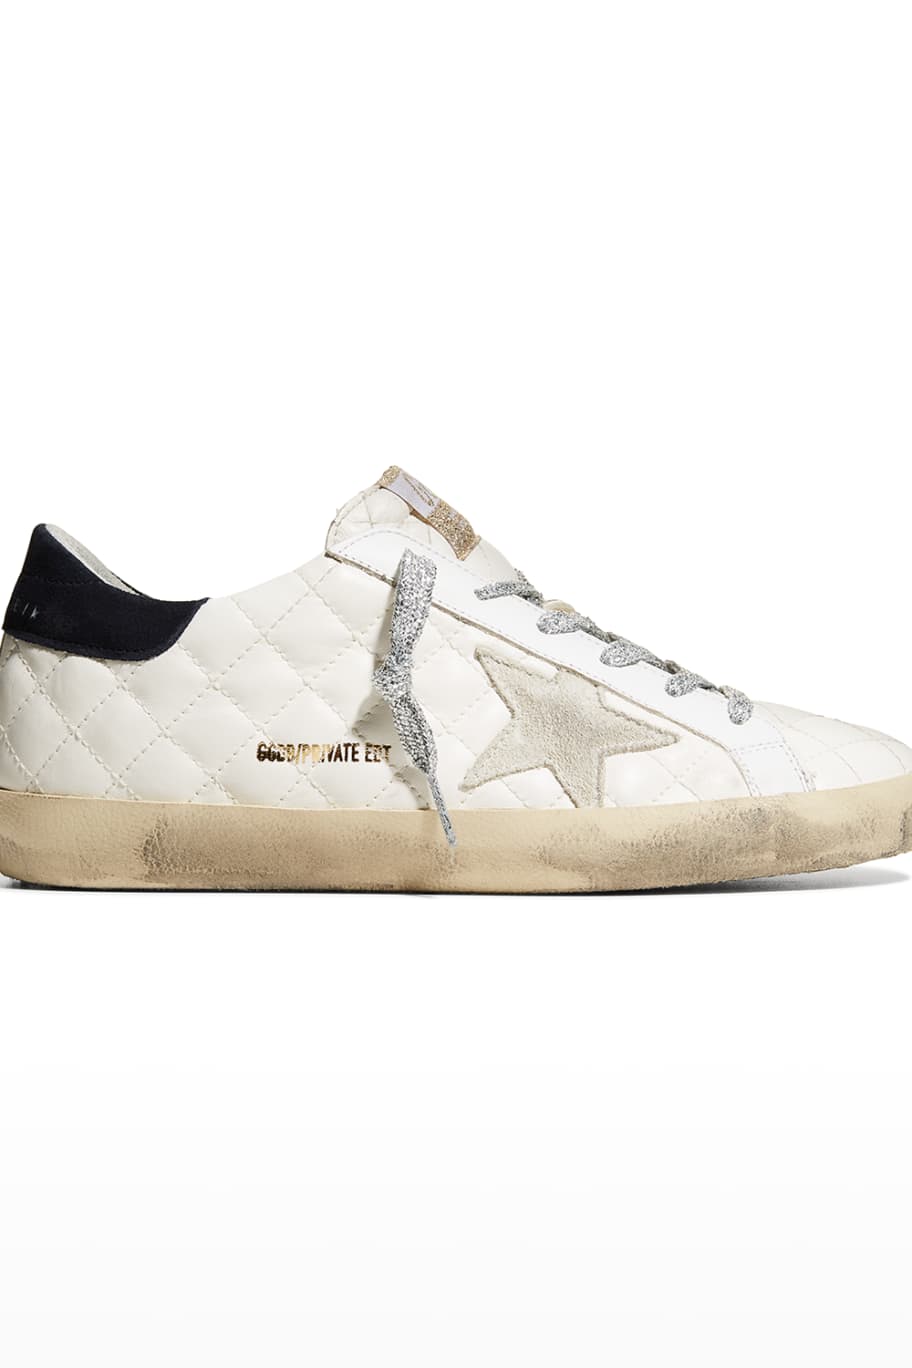 Golden Goose Superstar Quilted Leather Low-Top Sneakers | Neiman Marcus